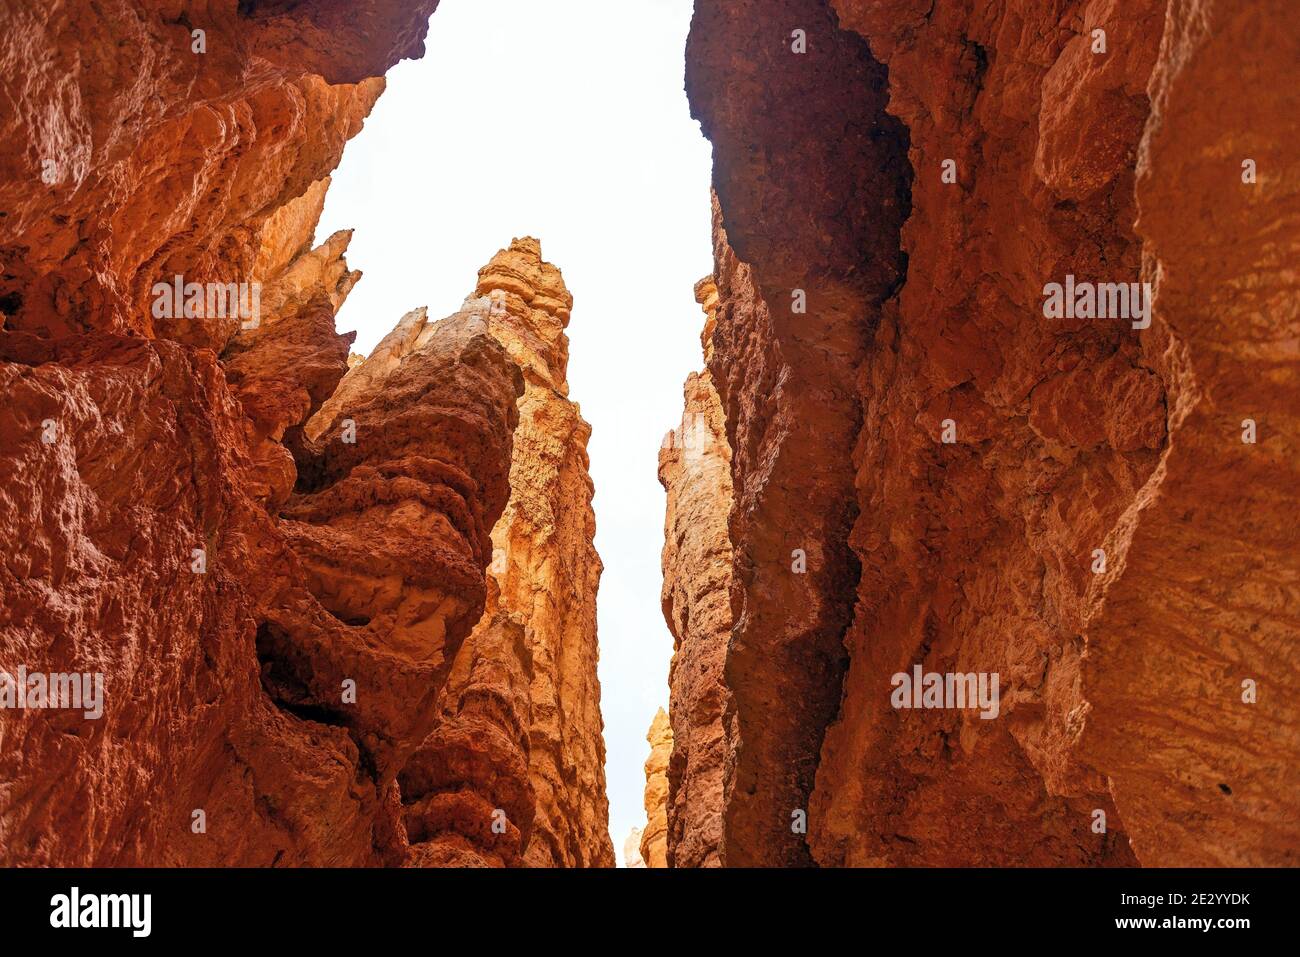 Hoodoo sandstone rock formation, Bryce Canyon, Utah, USA (United States of America). Stock Photo